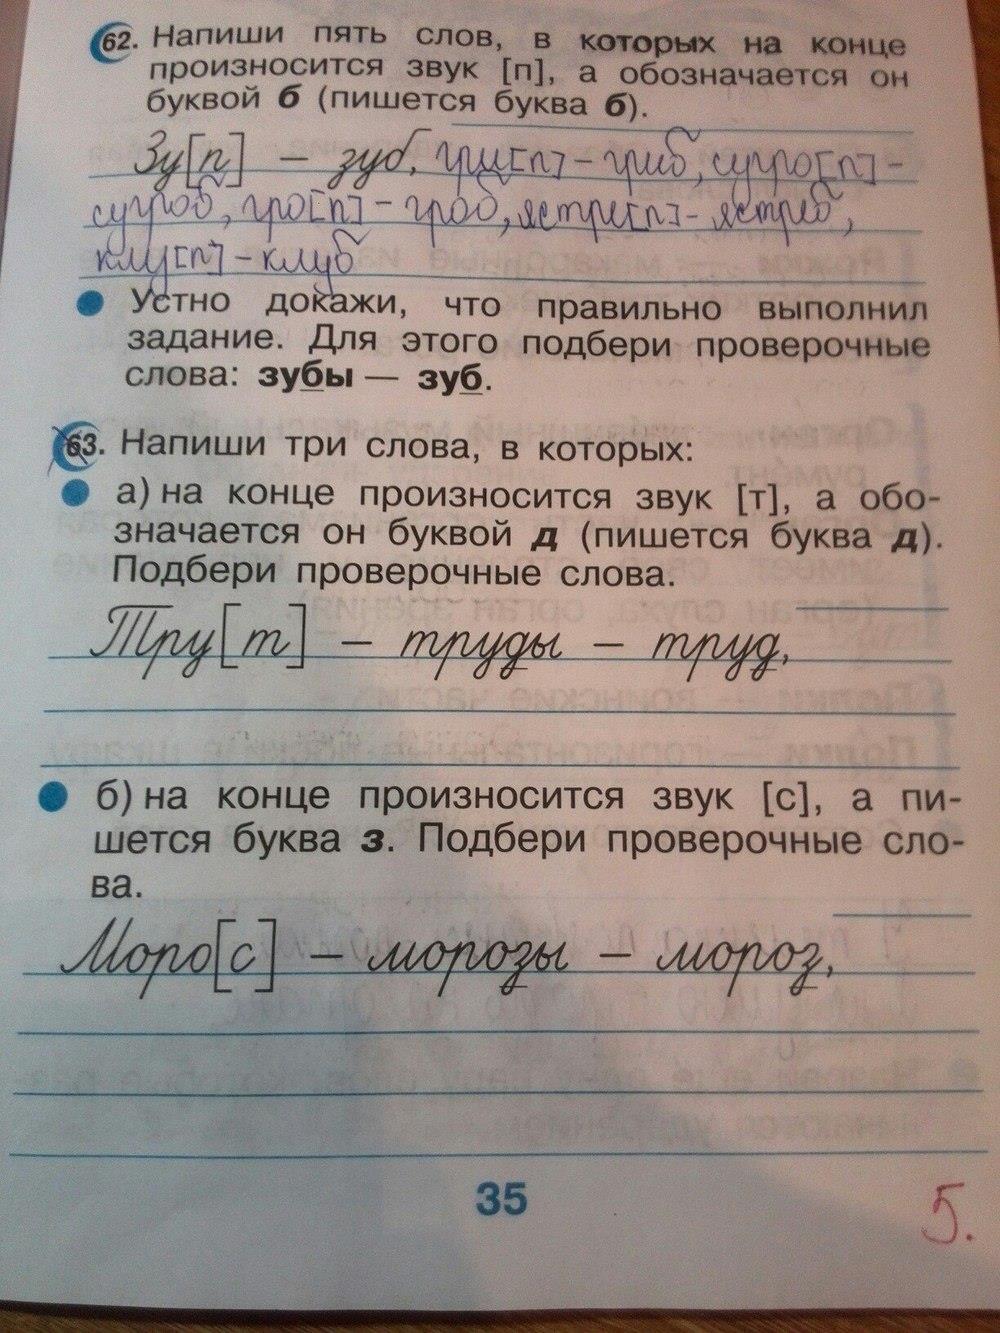 гдз 2 класс рабочая тетрадь страница 35 русский язык Рамзаева, Савинкина